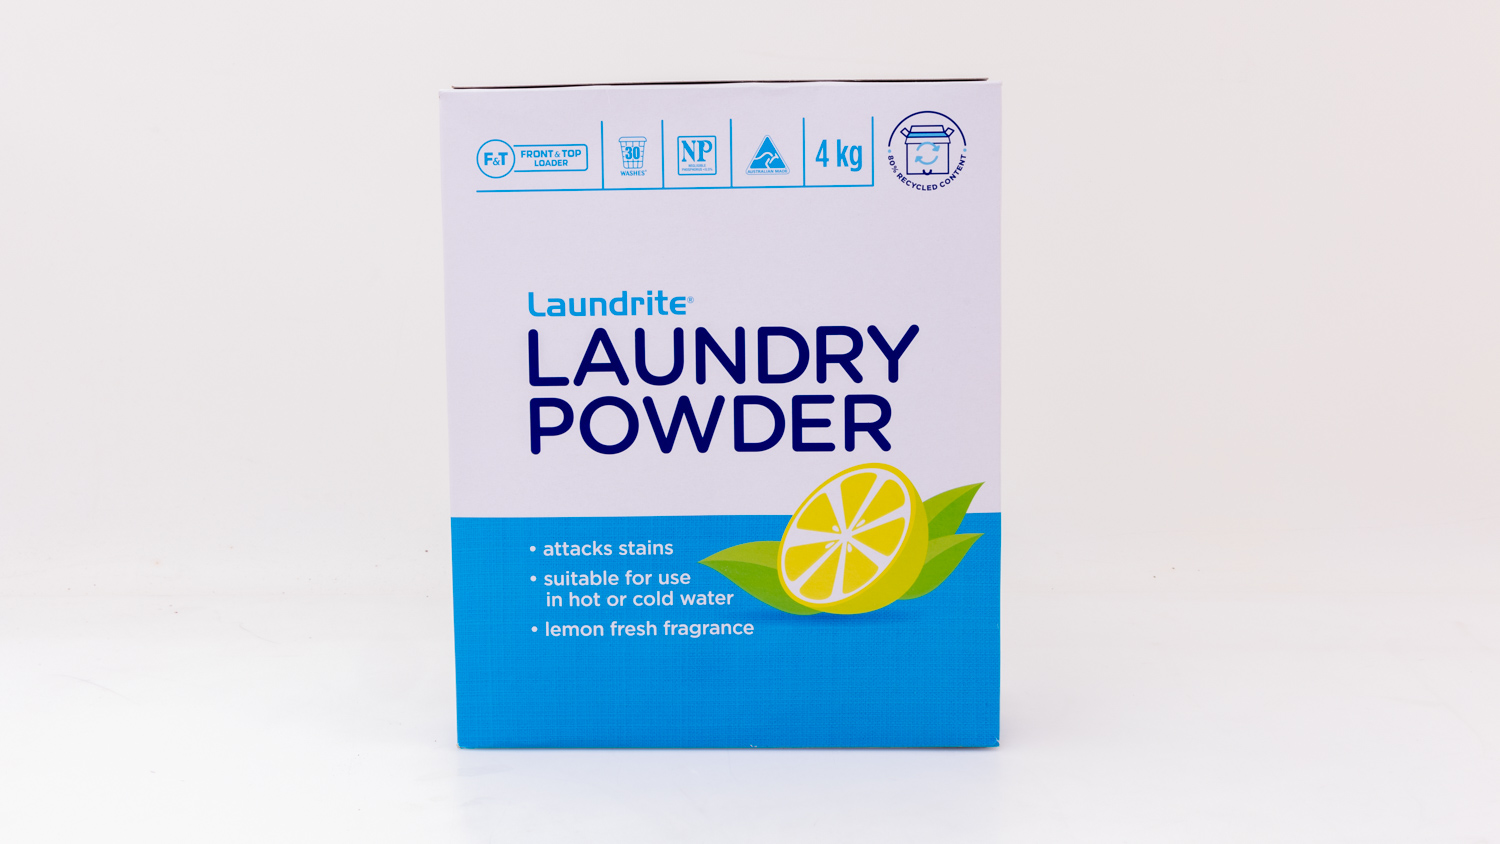 Aldi Laundrite Laundry Powder Top Loader carousel image